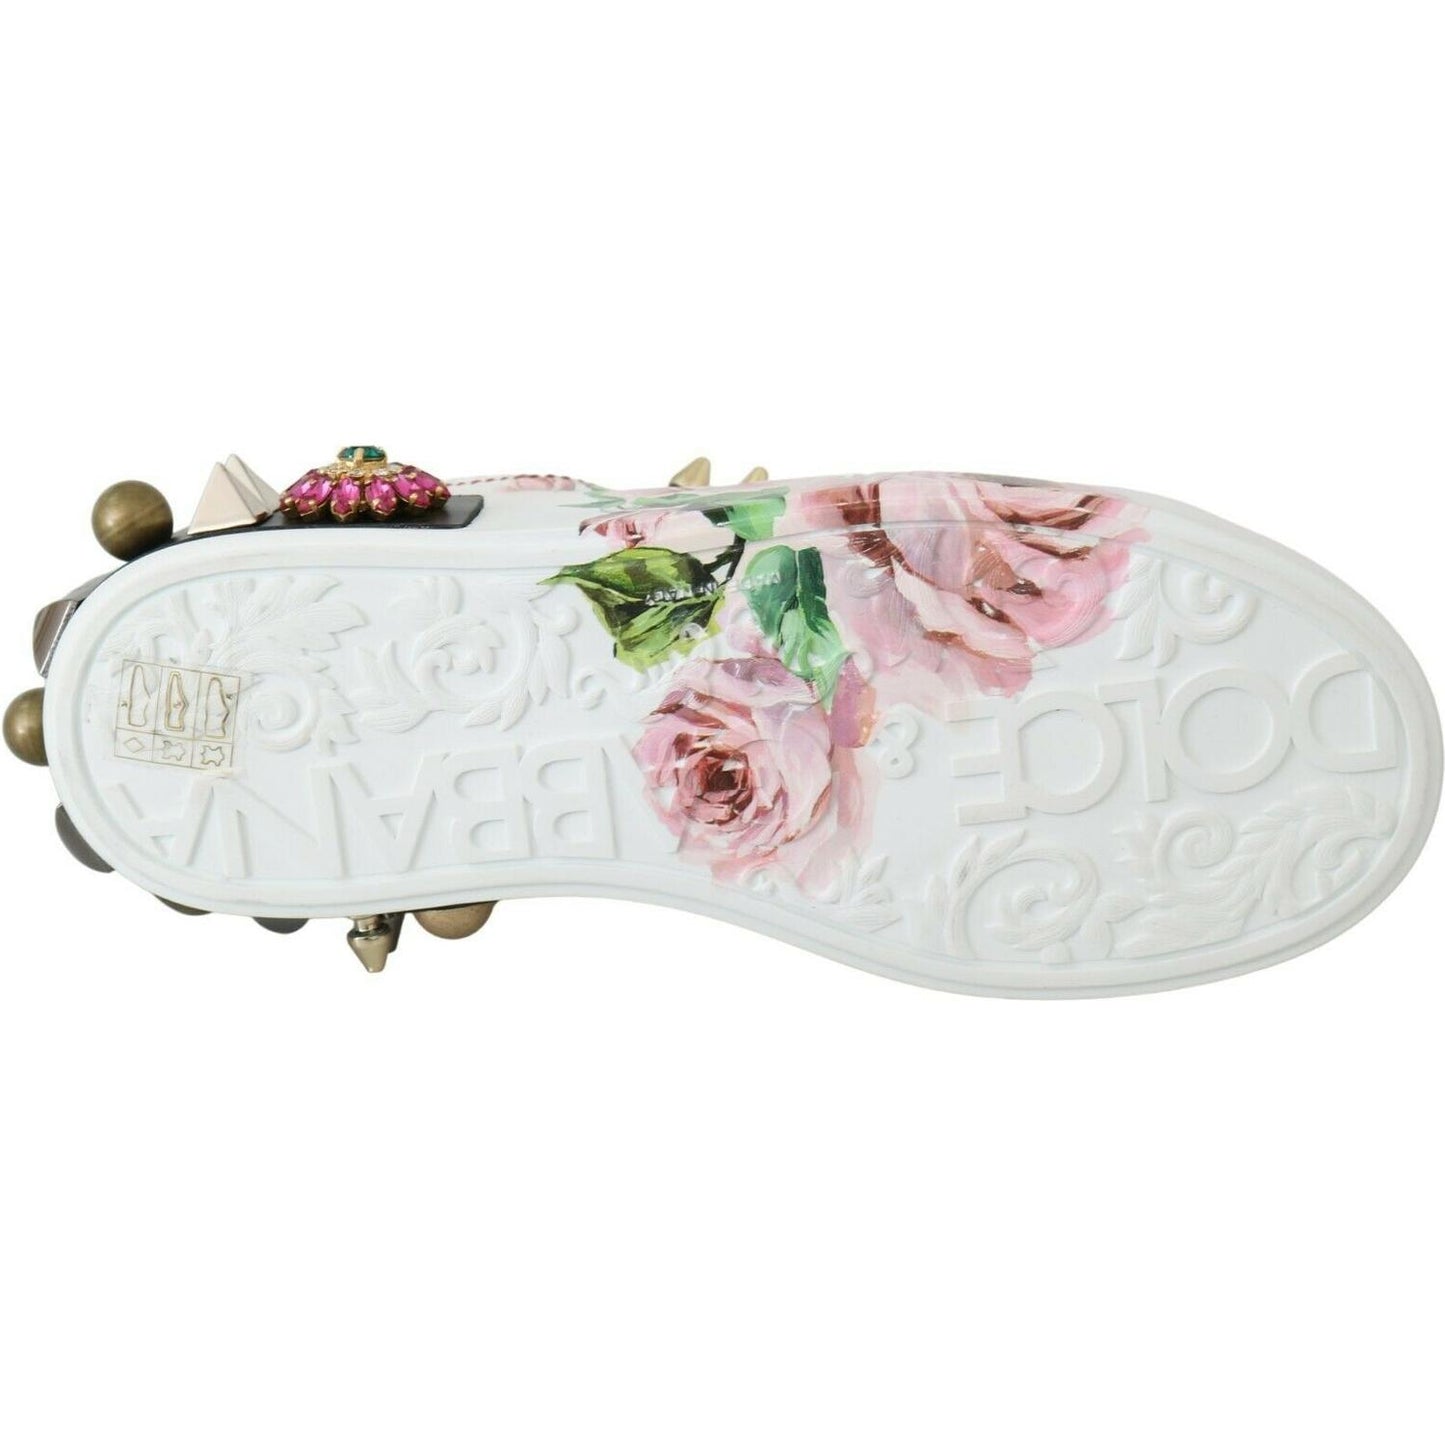 Dolce & Gabbana Floral Crystal-Embellished Leather Sneakers WOMAN SNEAKERS white-leather-crystal-roses-floral-sneakers-shoes